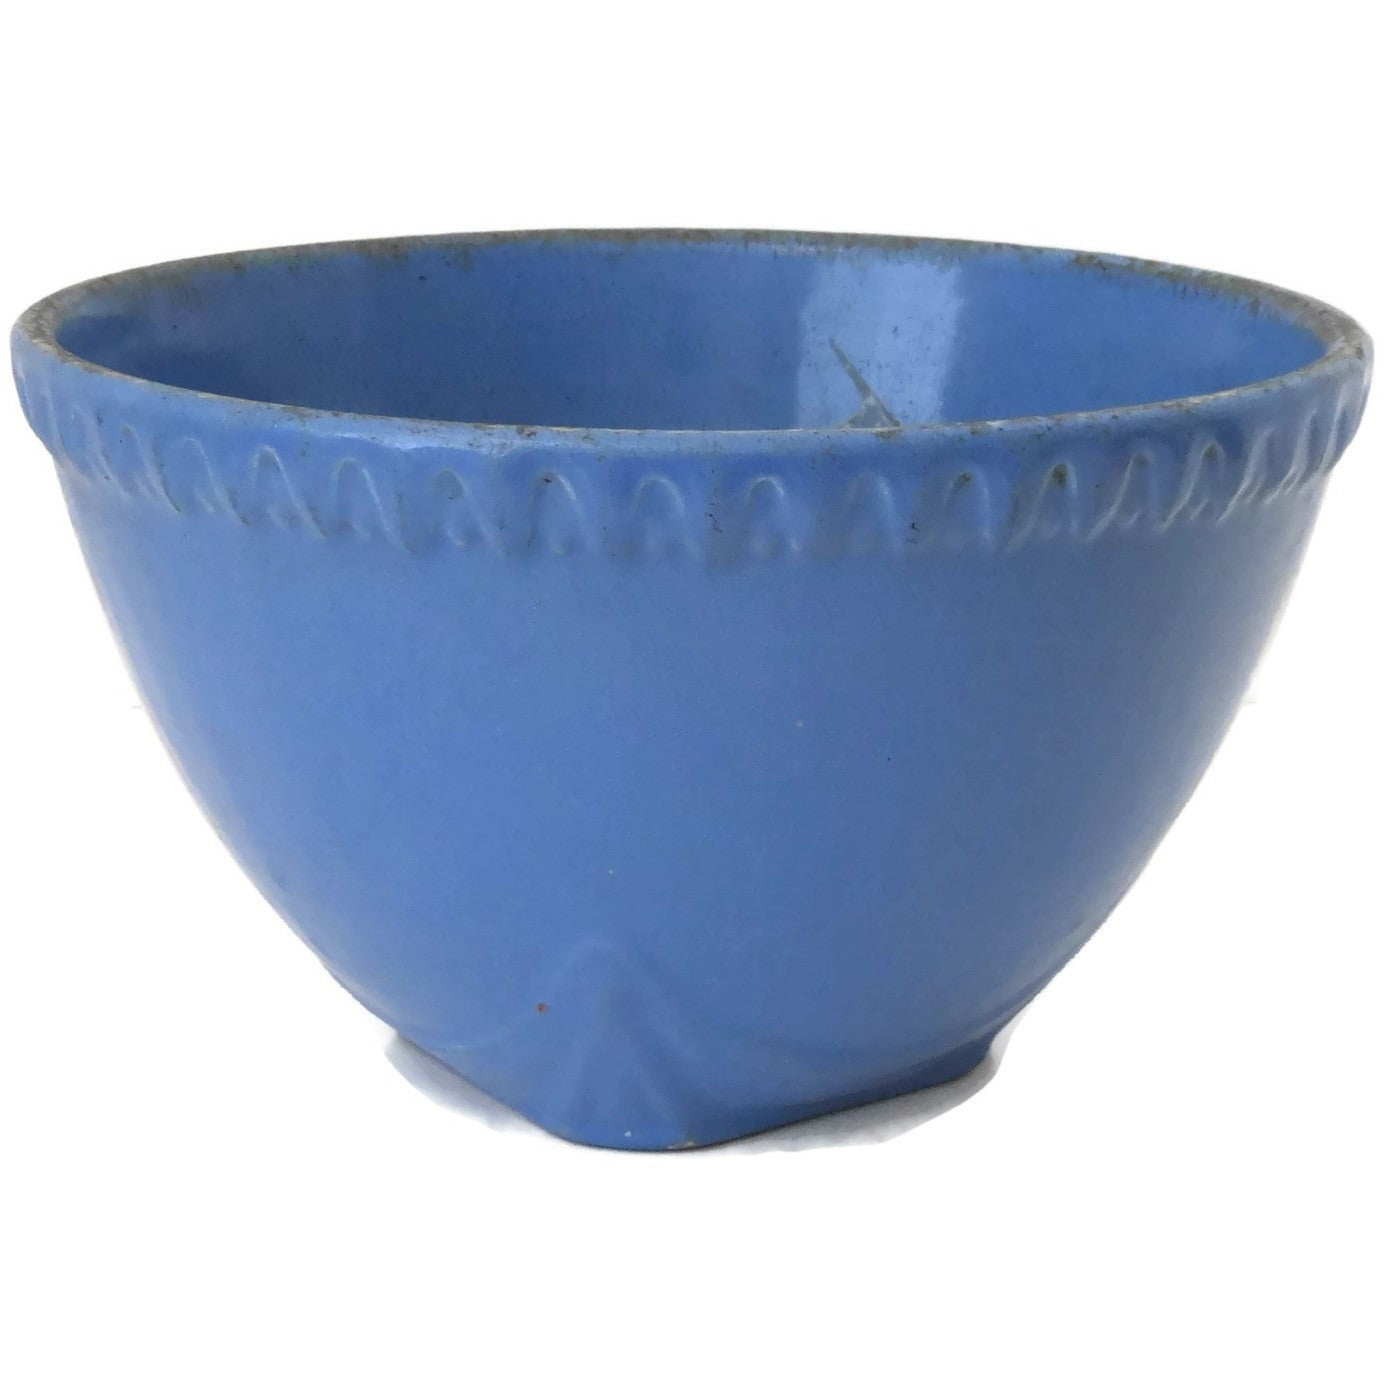 Vintage stoneware mixing bowl, bright blue (c 1930s)